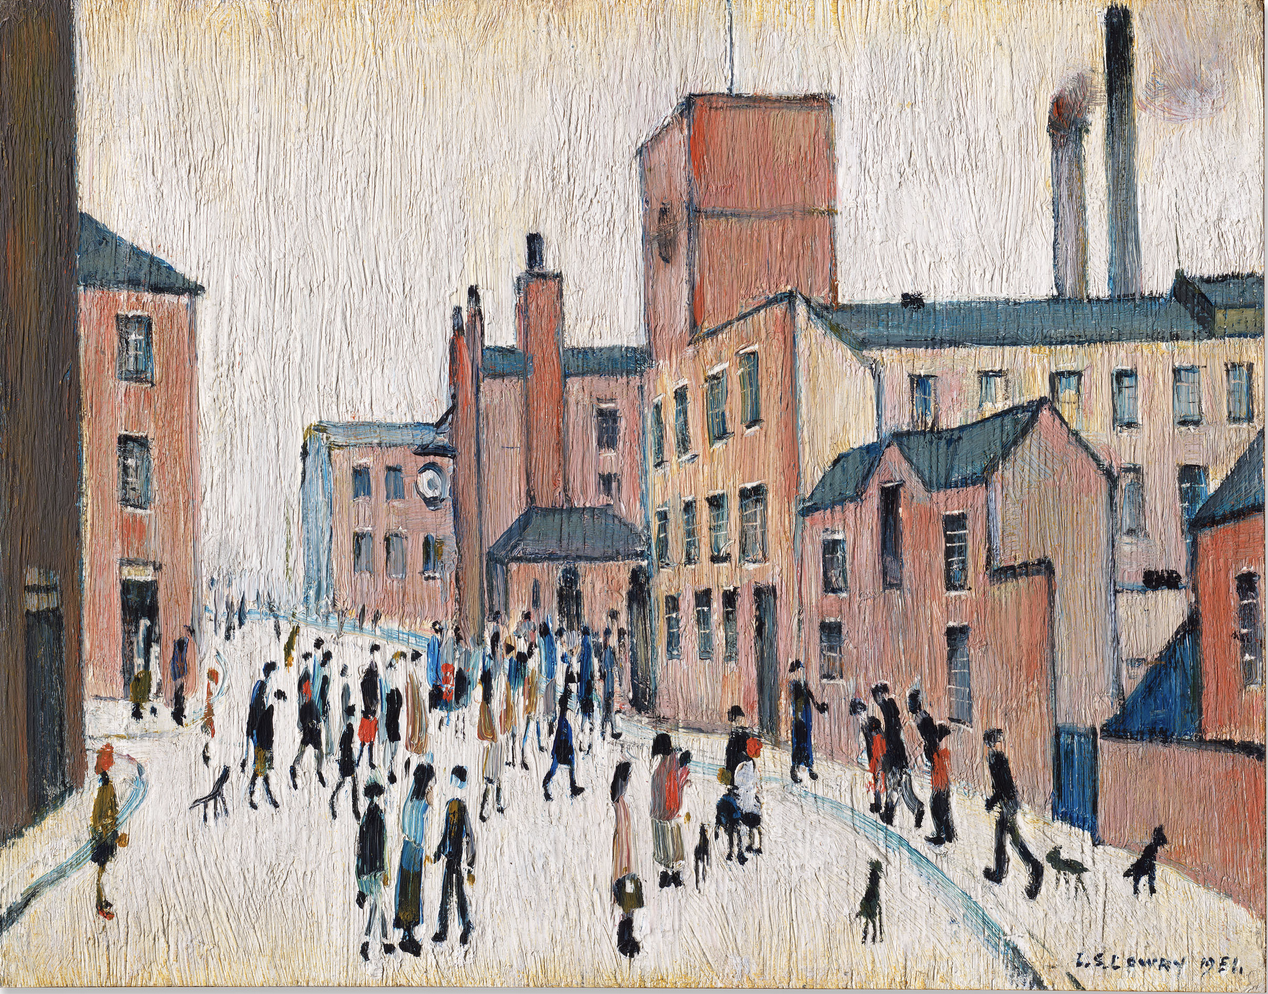 Lancashire Street (1951) by Laurence Stephen Lowry (1887 - 1976), English artist.